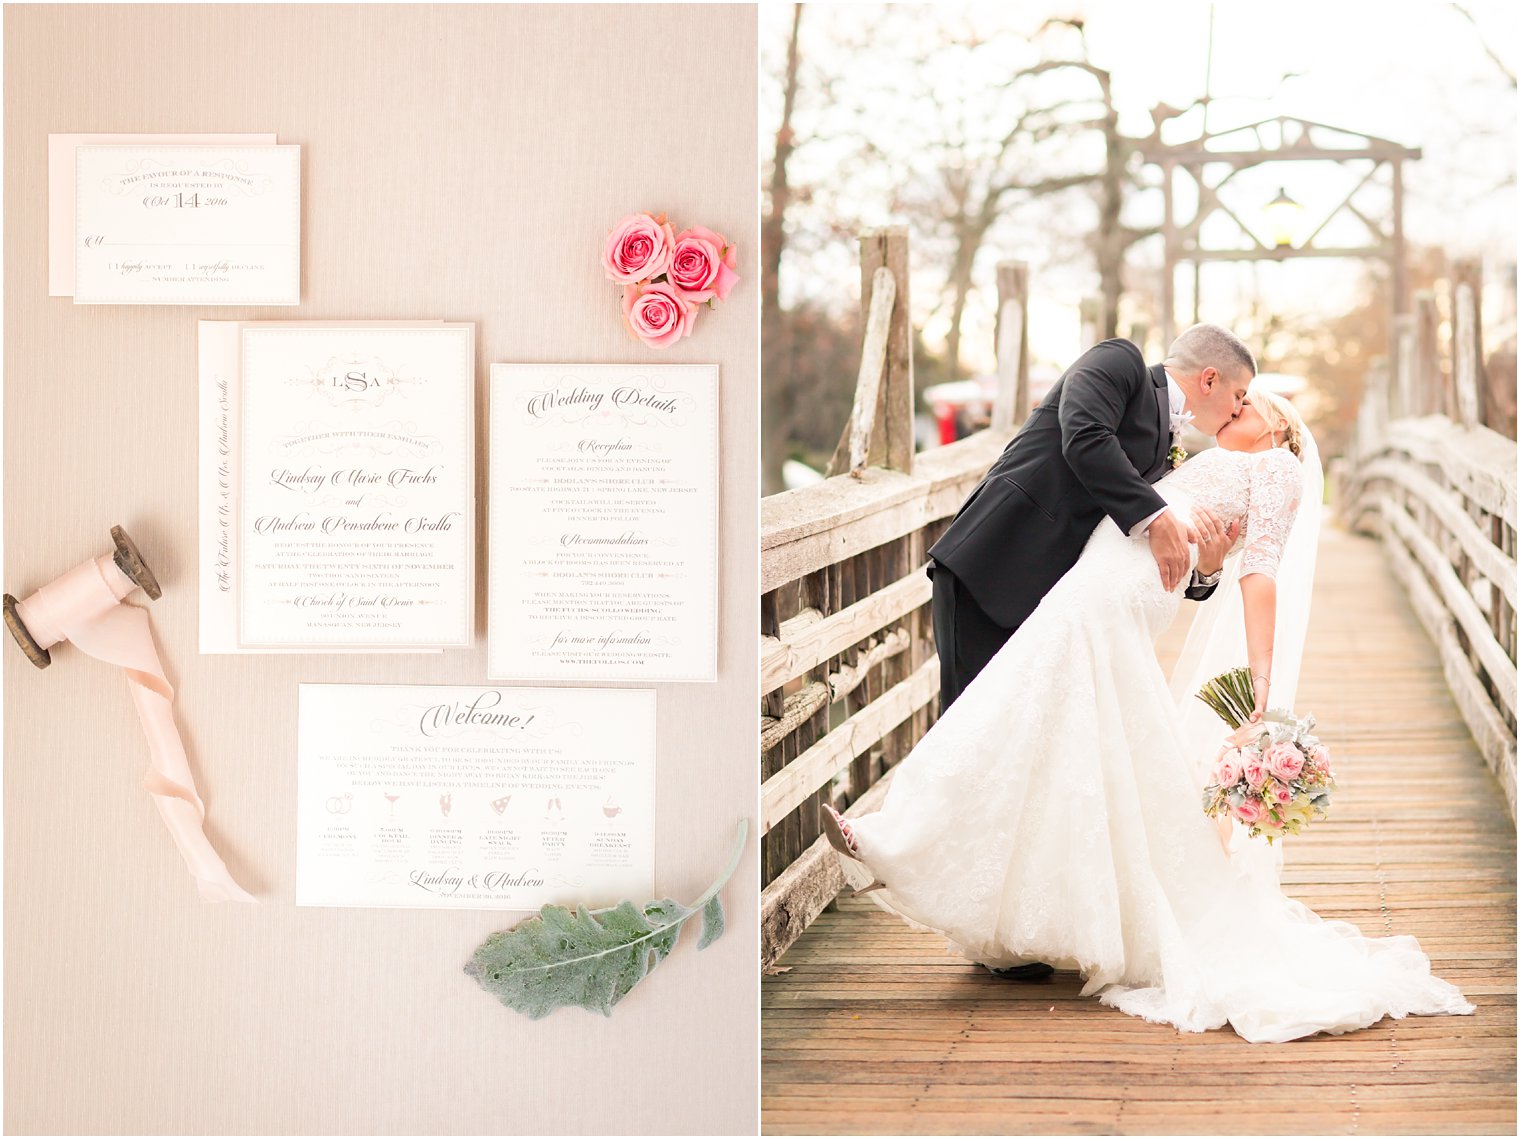 Wedding Invitations by Holland Designs | Photo by Idalia Photography